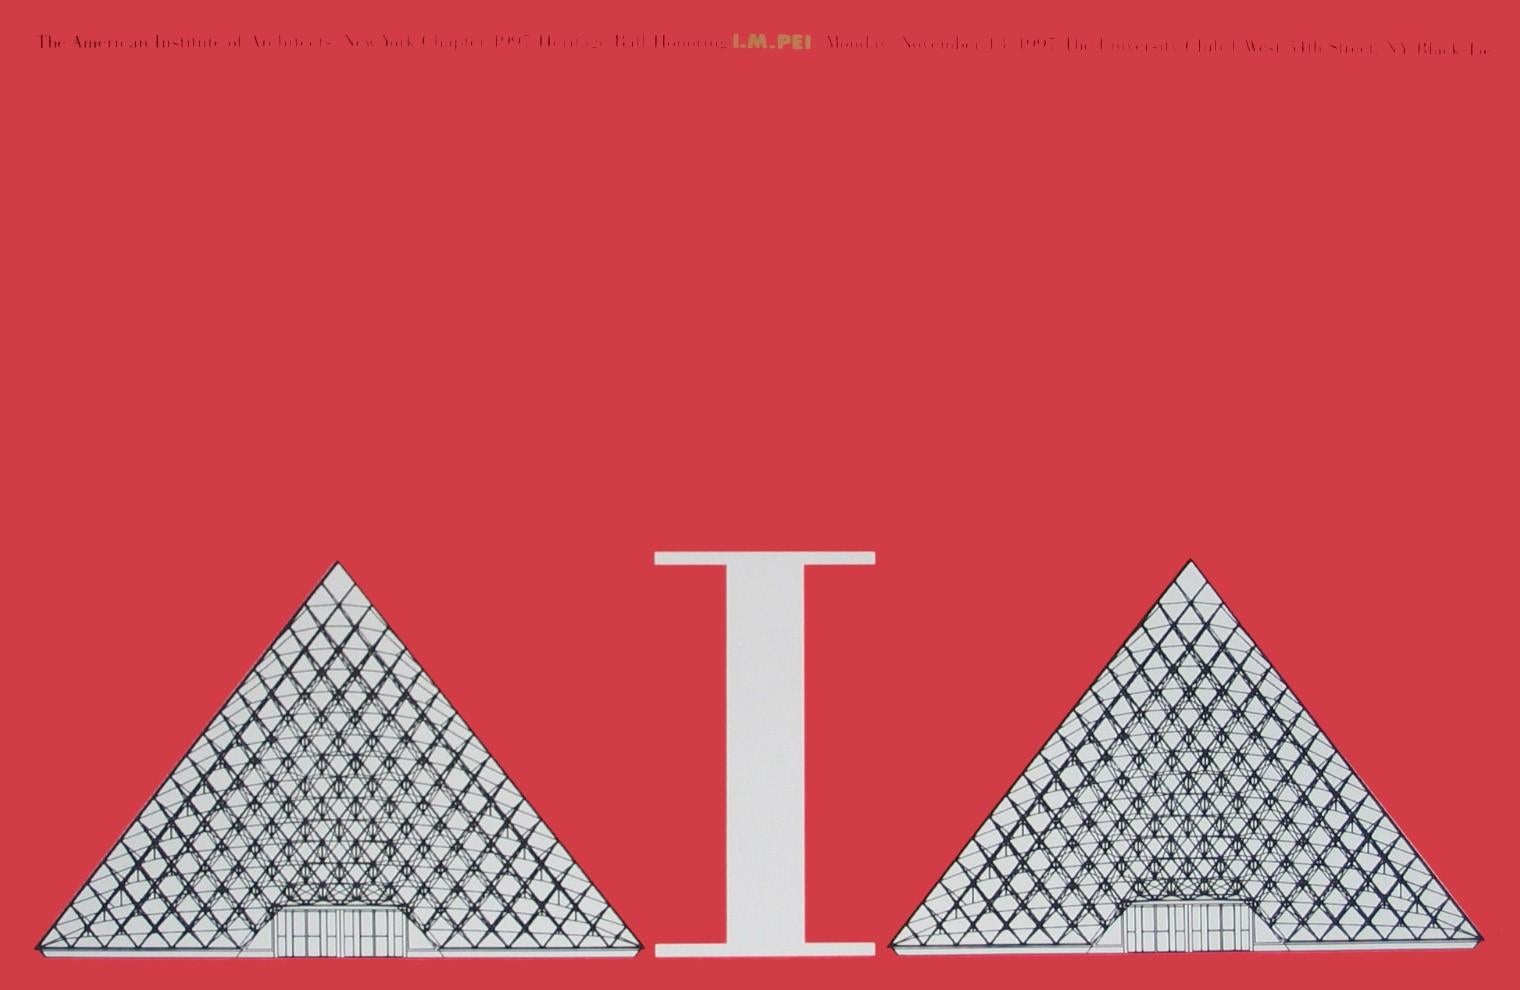 Michael Gericke Print - "AIA Ball 1997 - I.M. Pei" Graphic Design Vintage Architecture Louvre Poster